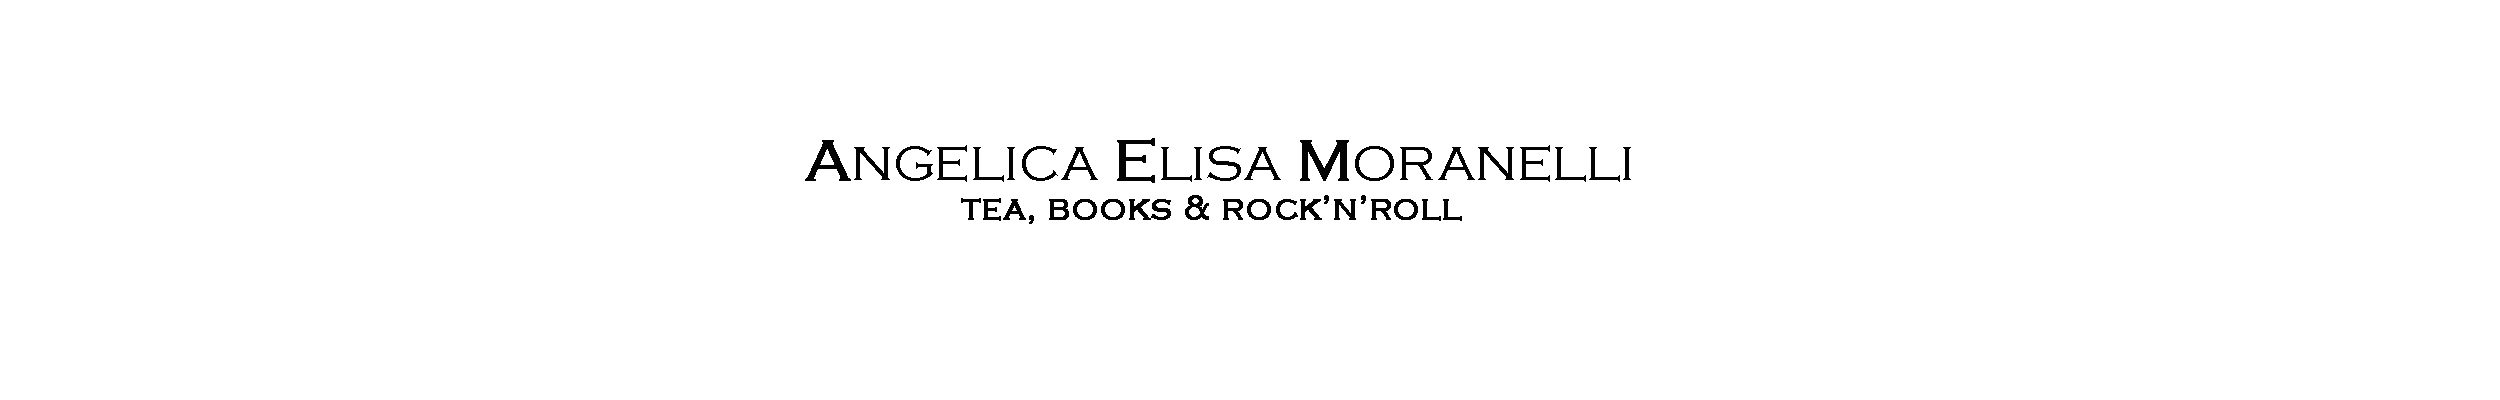 Tea, Books & Rock'N'Roll, il blog di Angelica Elisa Moranelli